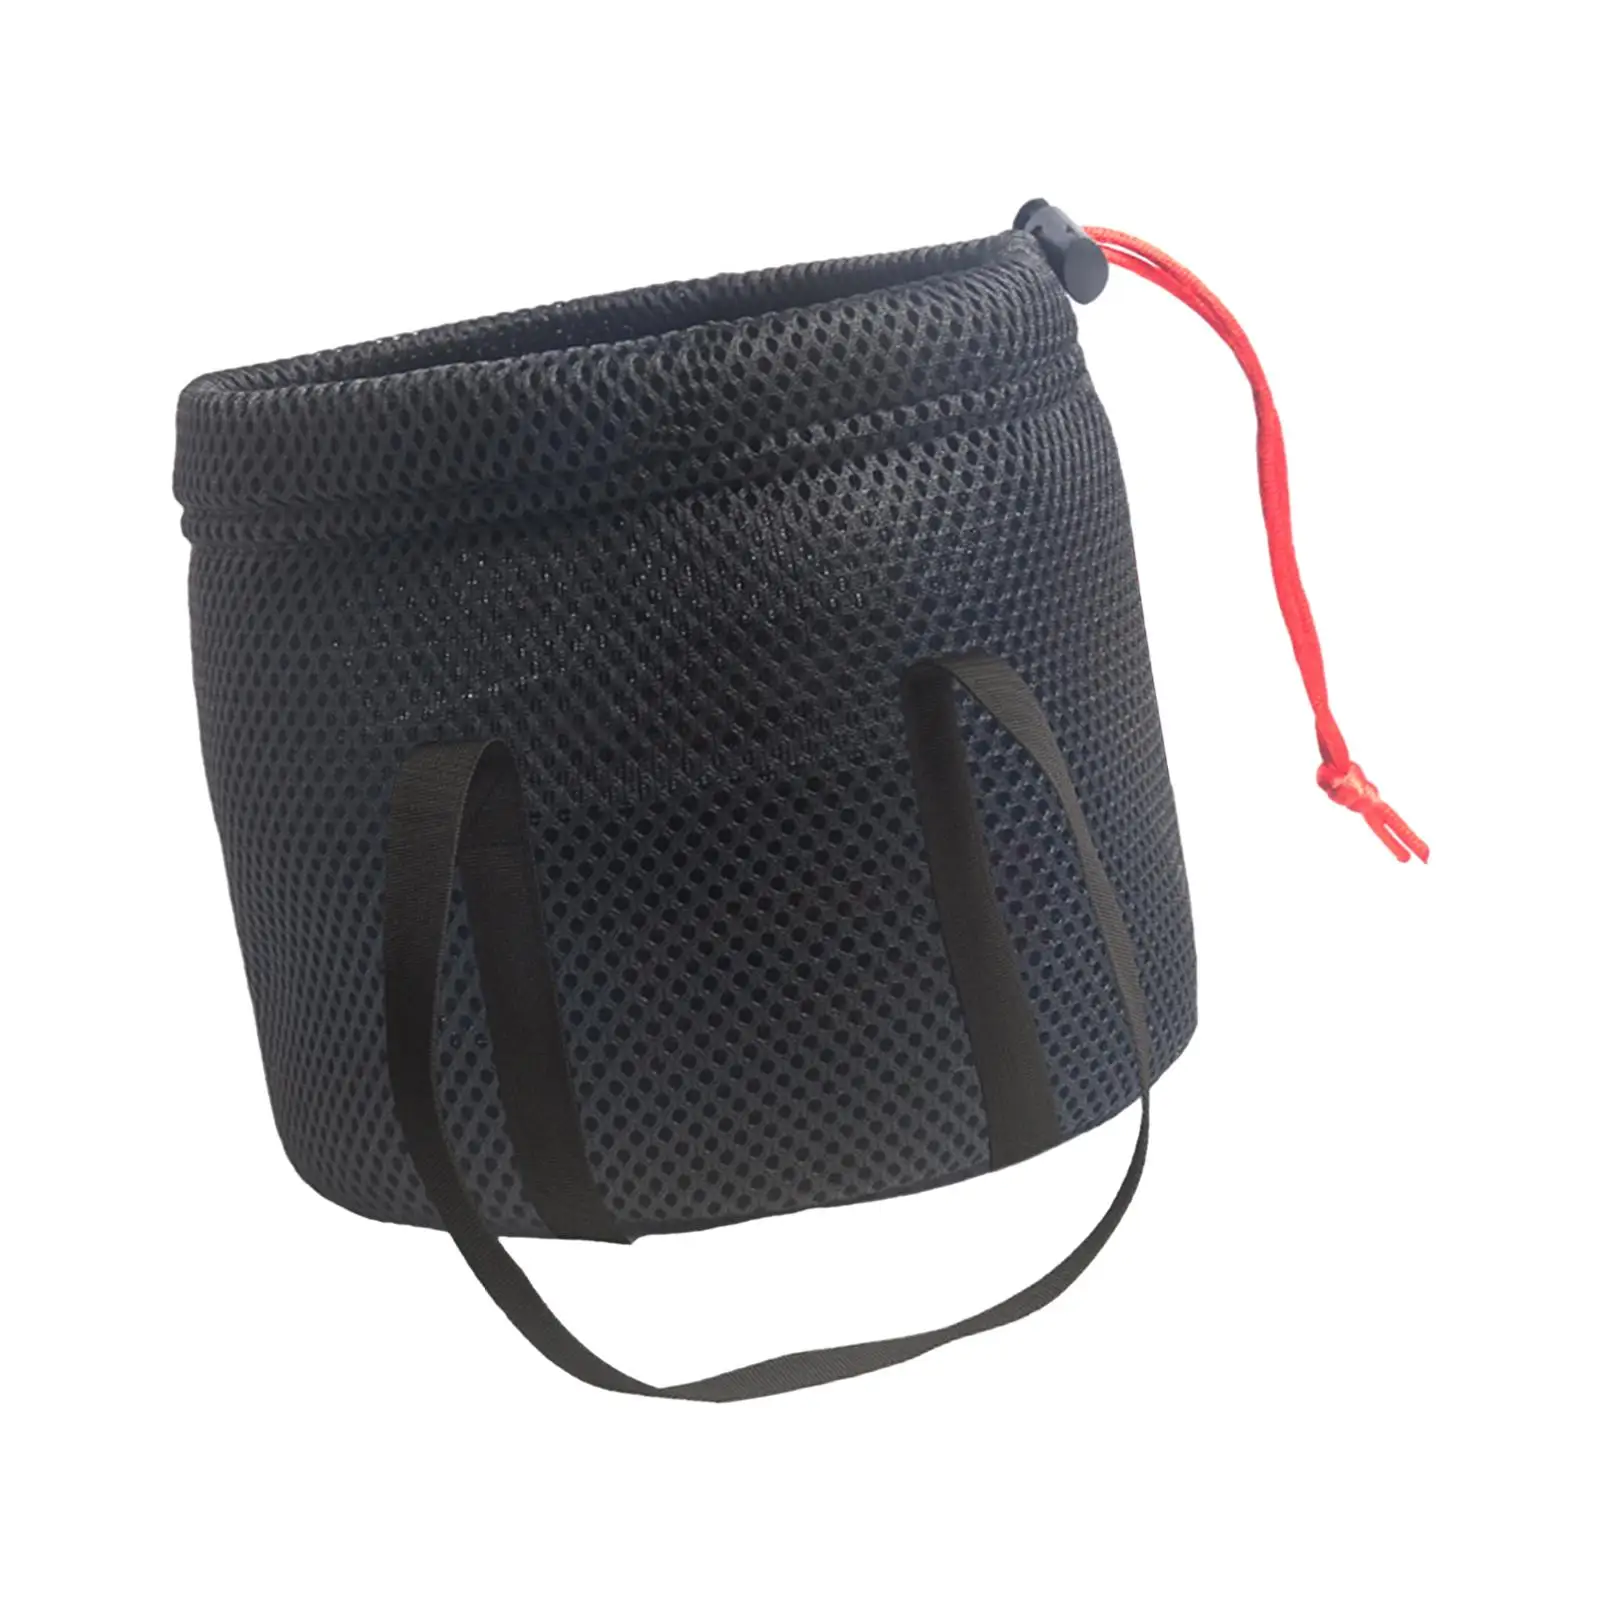 Camping Pot Storage Bag Drawstring Portable Lightweight Camping Cookware Bag for